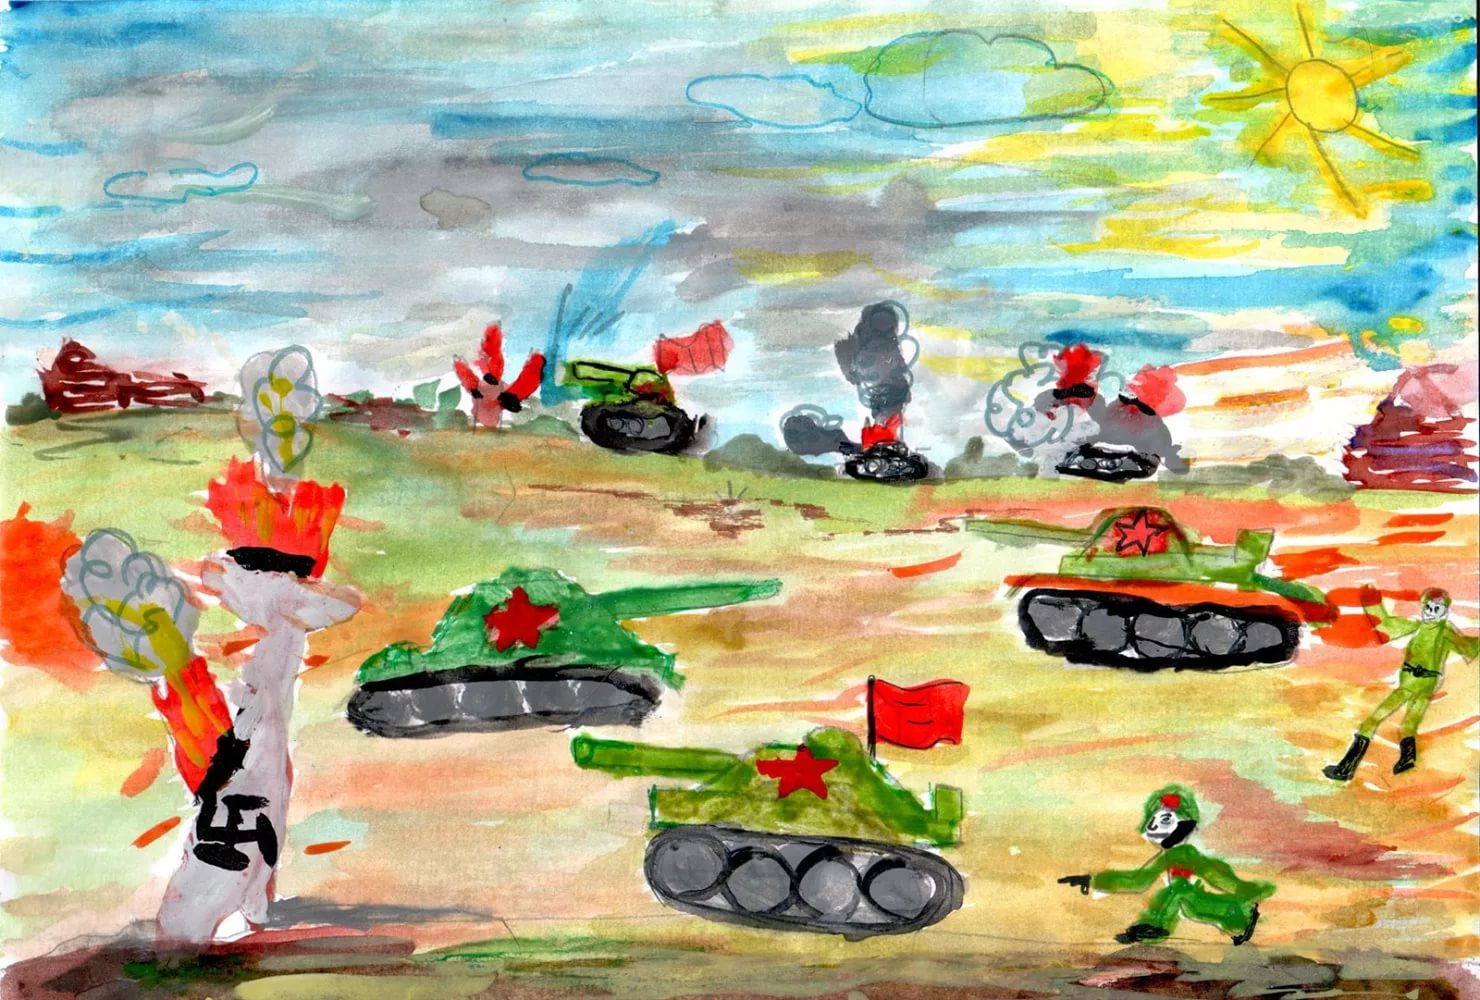 Рисунок про великую войну. Детские рисунки о войне. Детские рисунки на военную тему. Конкурс рисунков на военную тему.